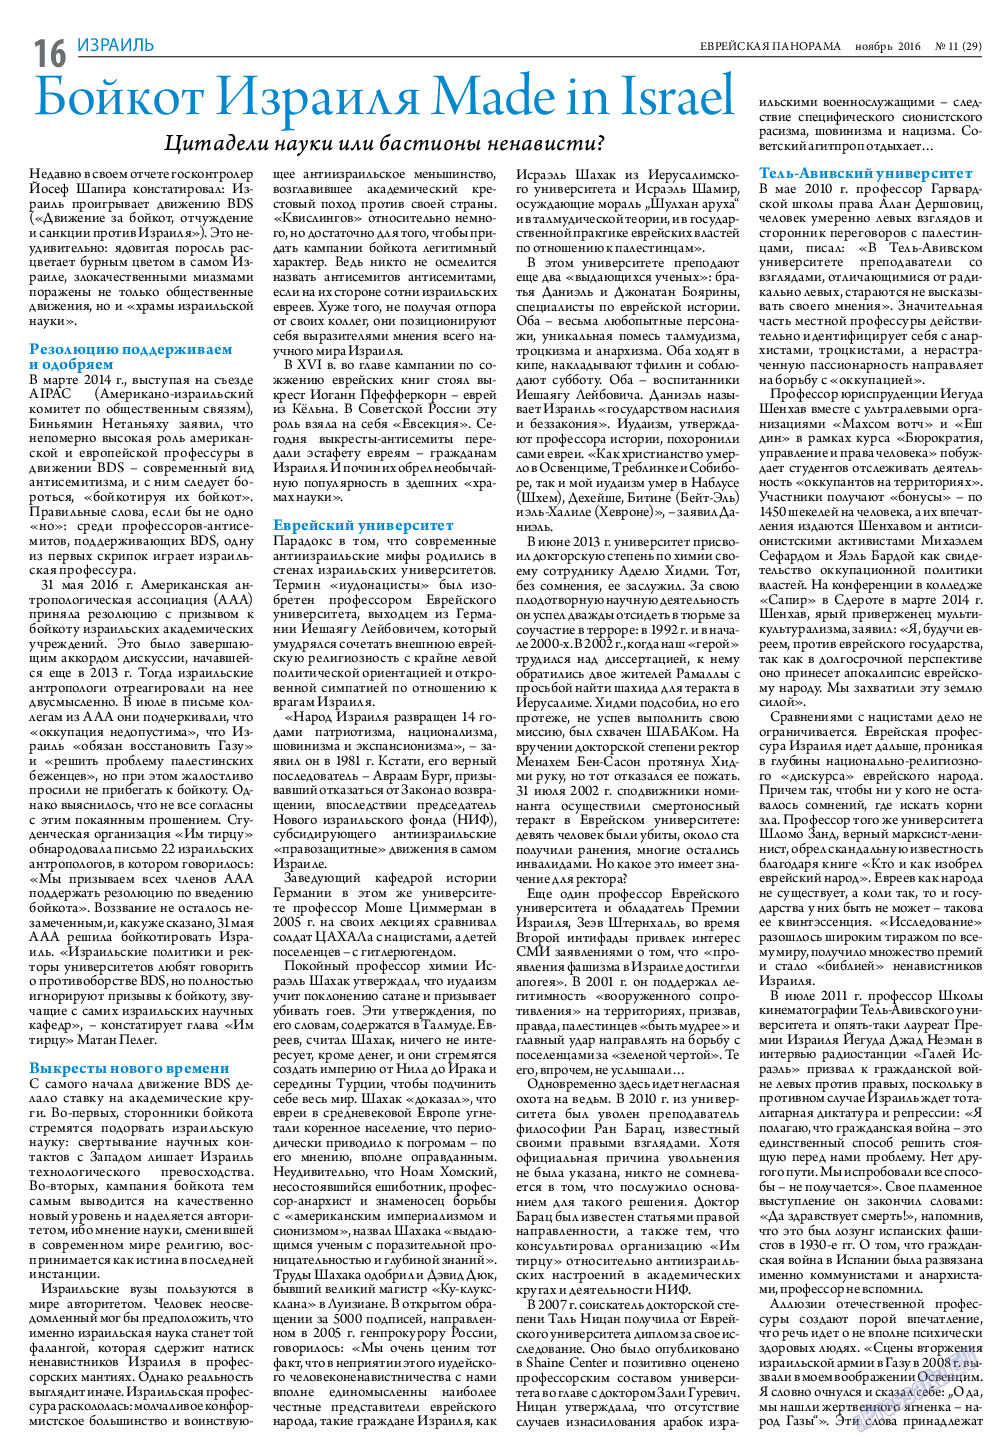 Еврейская панорама, газета. 2016 №11 стр.16